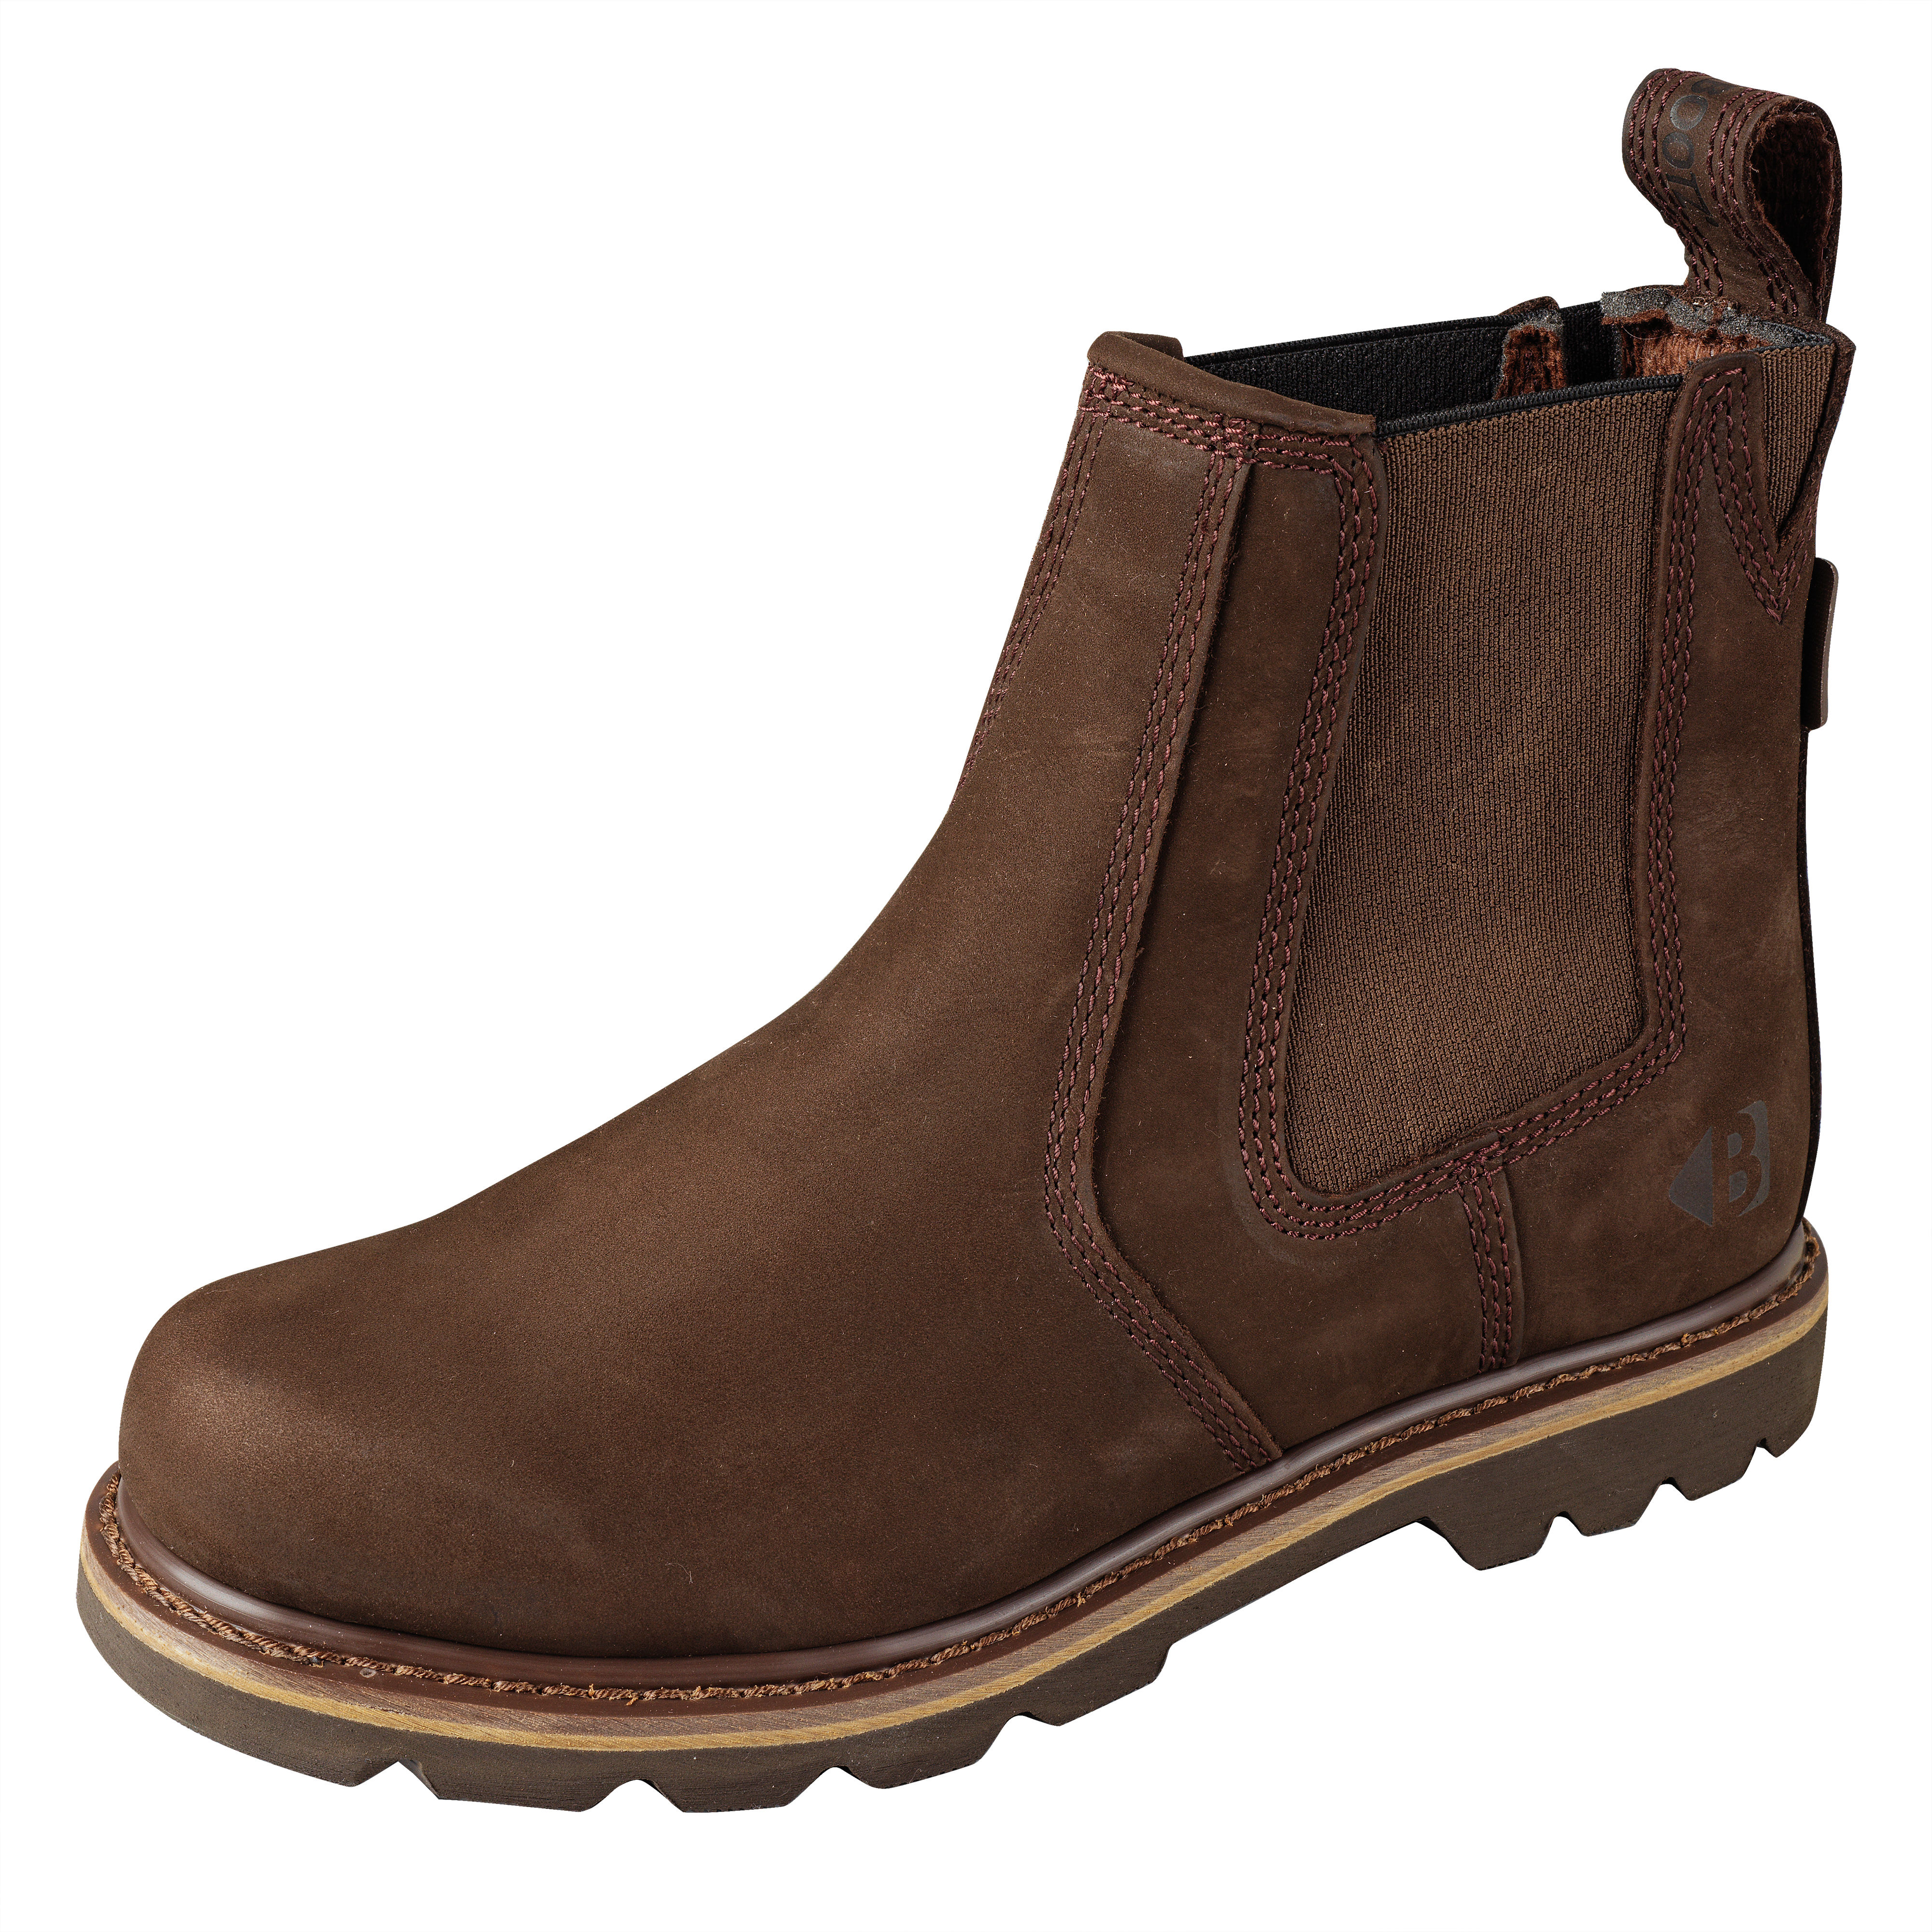 Buckler Buckflex Non-Safety Dealer Boots Chocolate Oil Leather - B1400